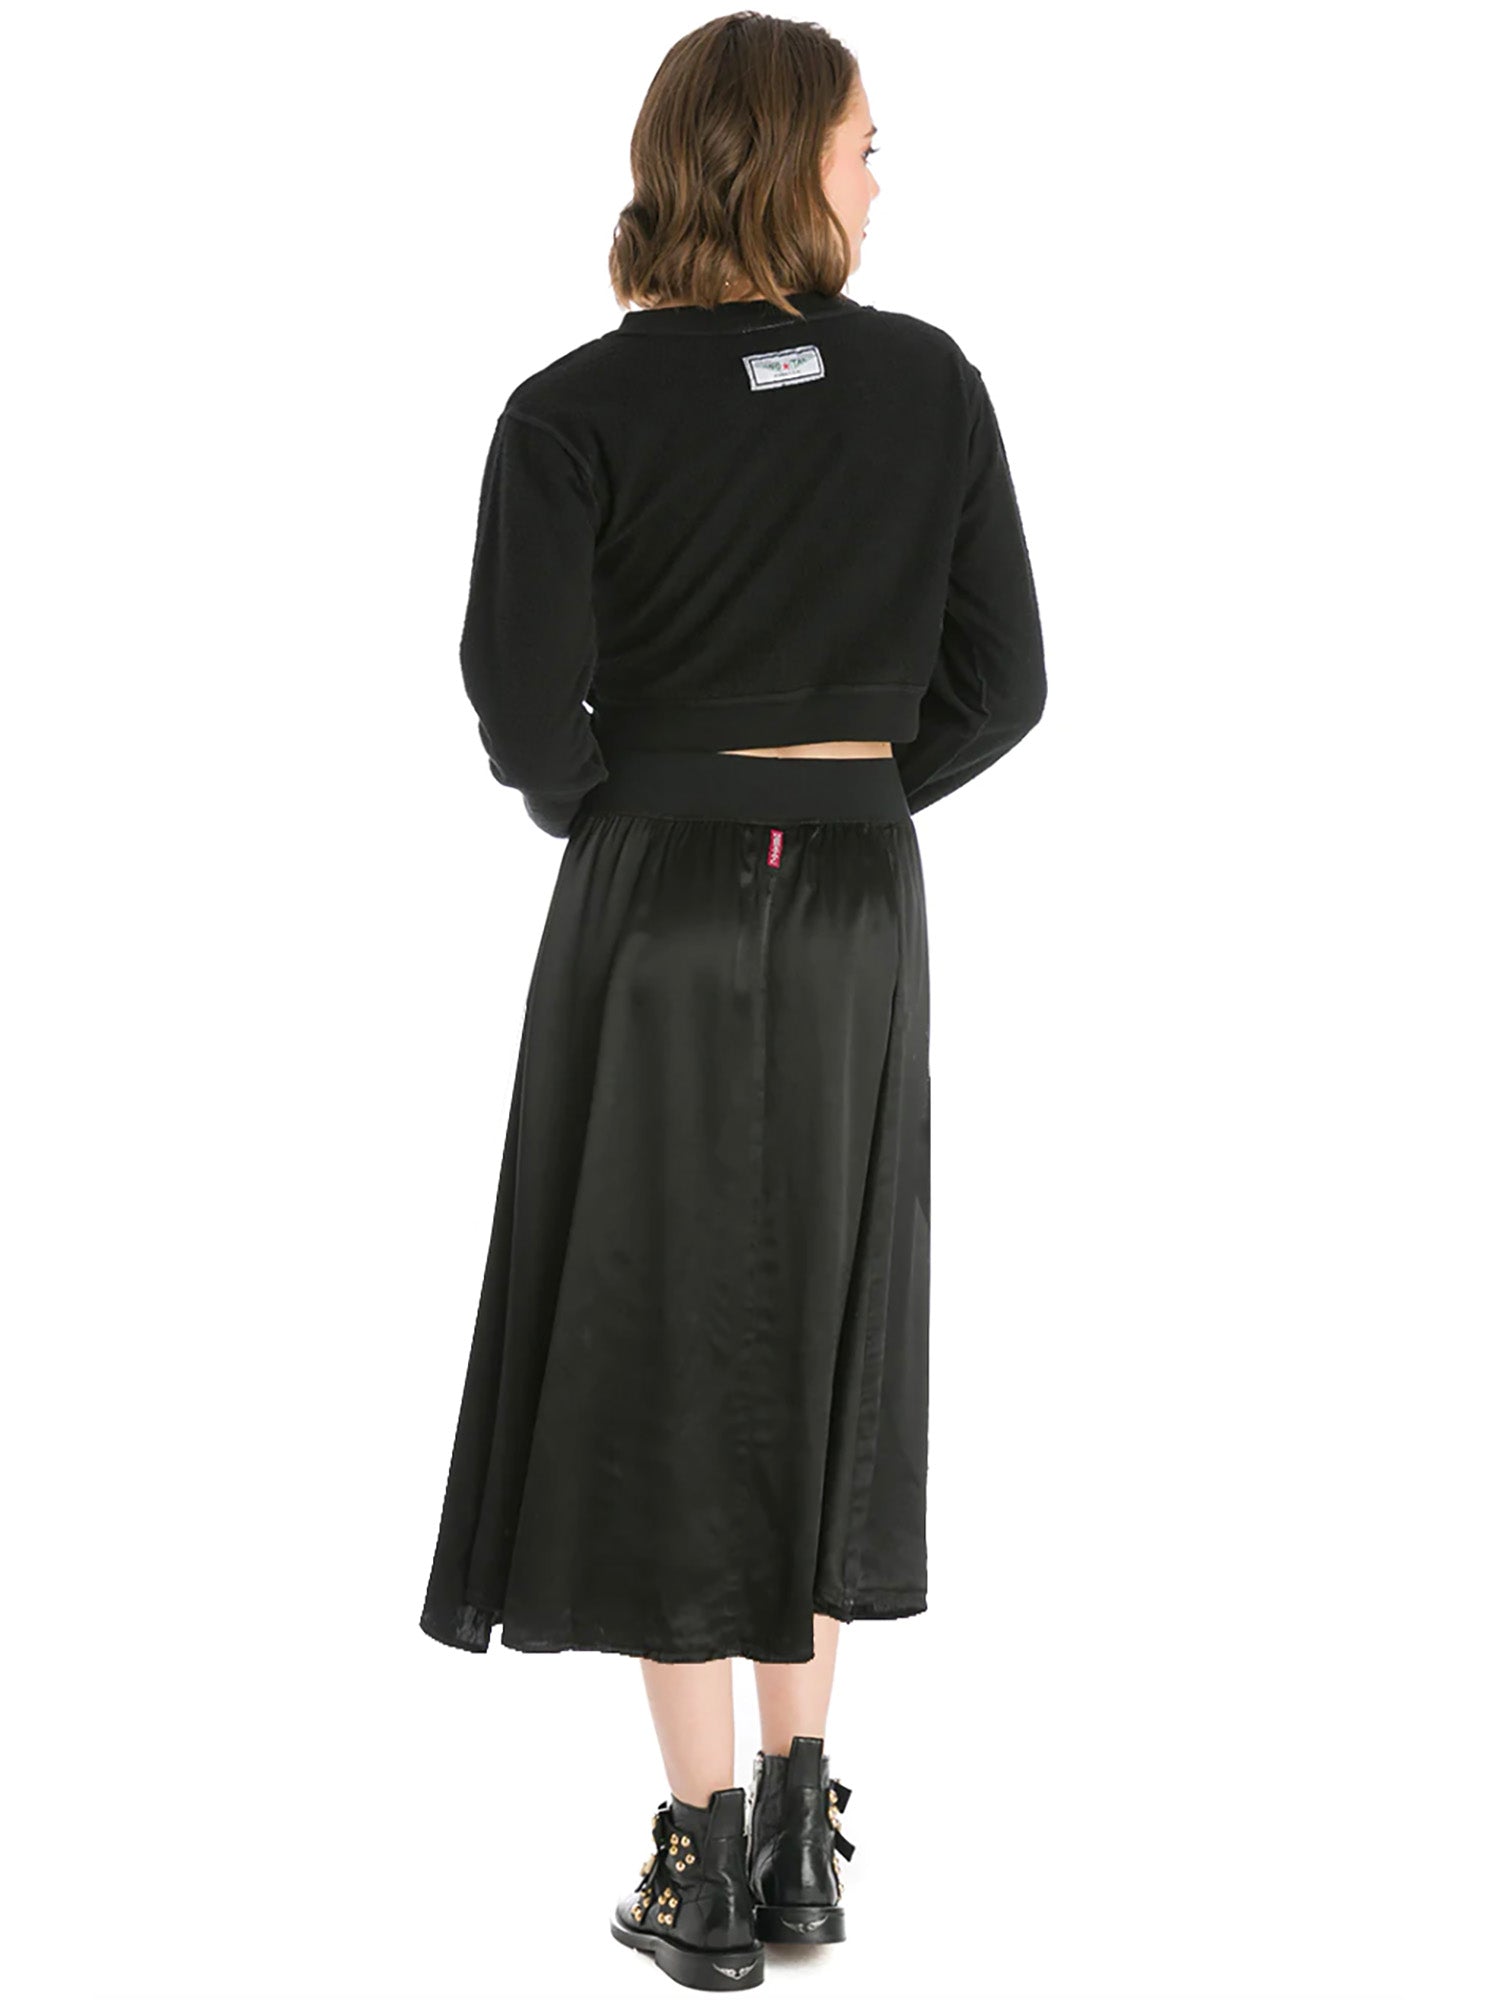 Hard Tail Princess Panel Satin Midi Skirt (Style: SAT-43) - Skirts